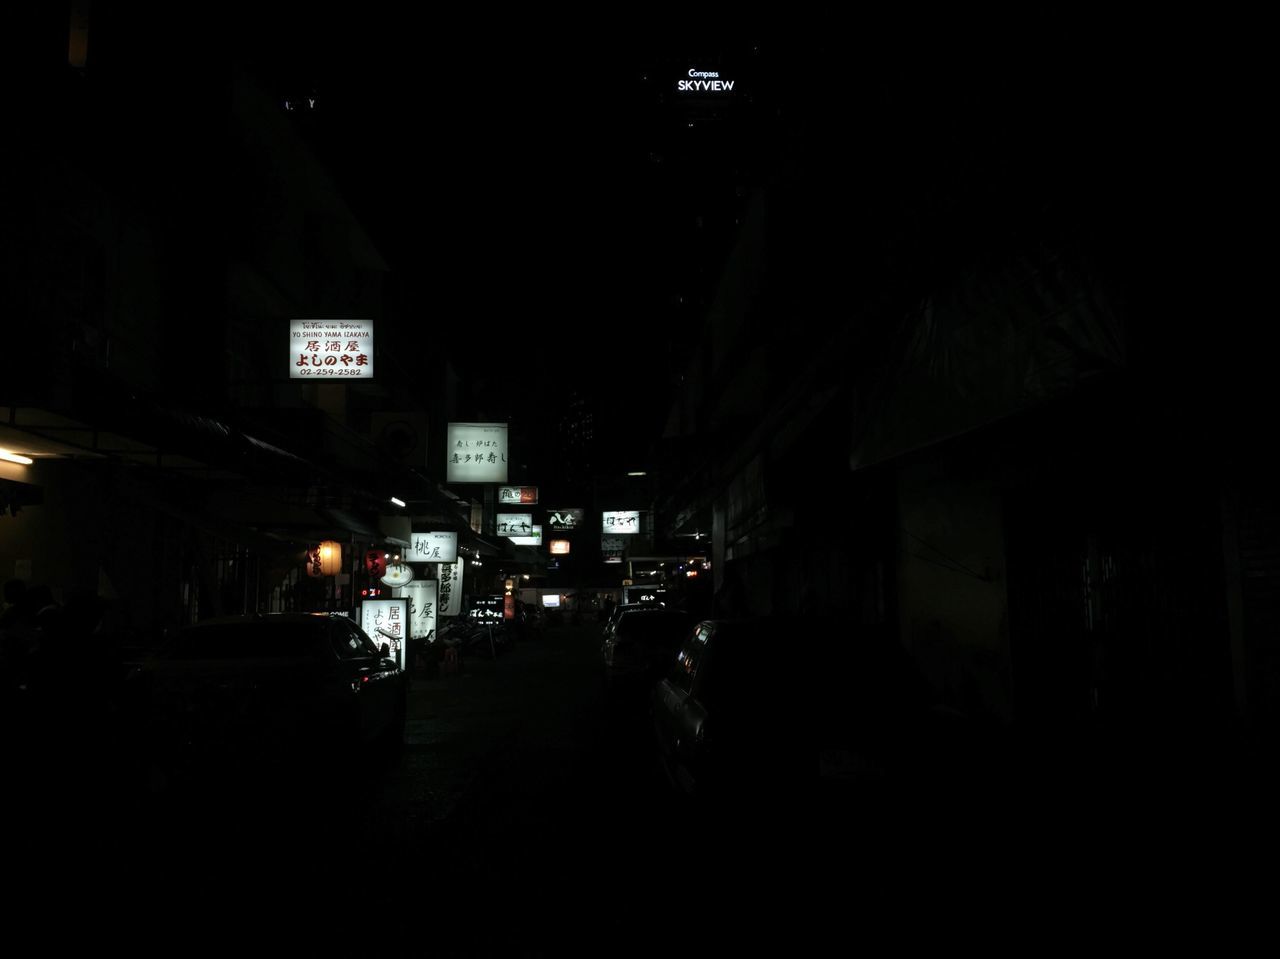 Illuminated store sign at night